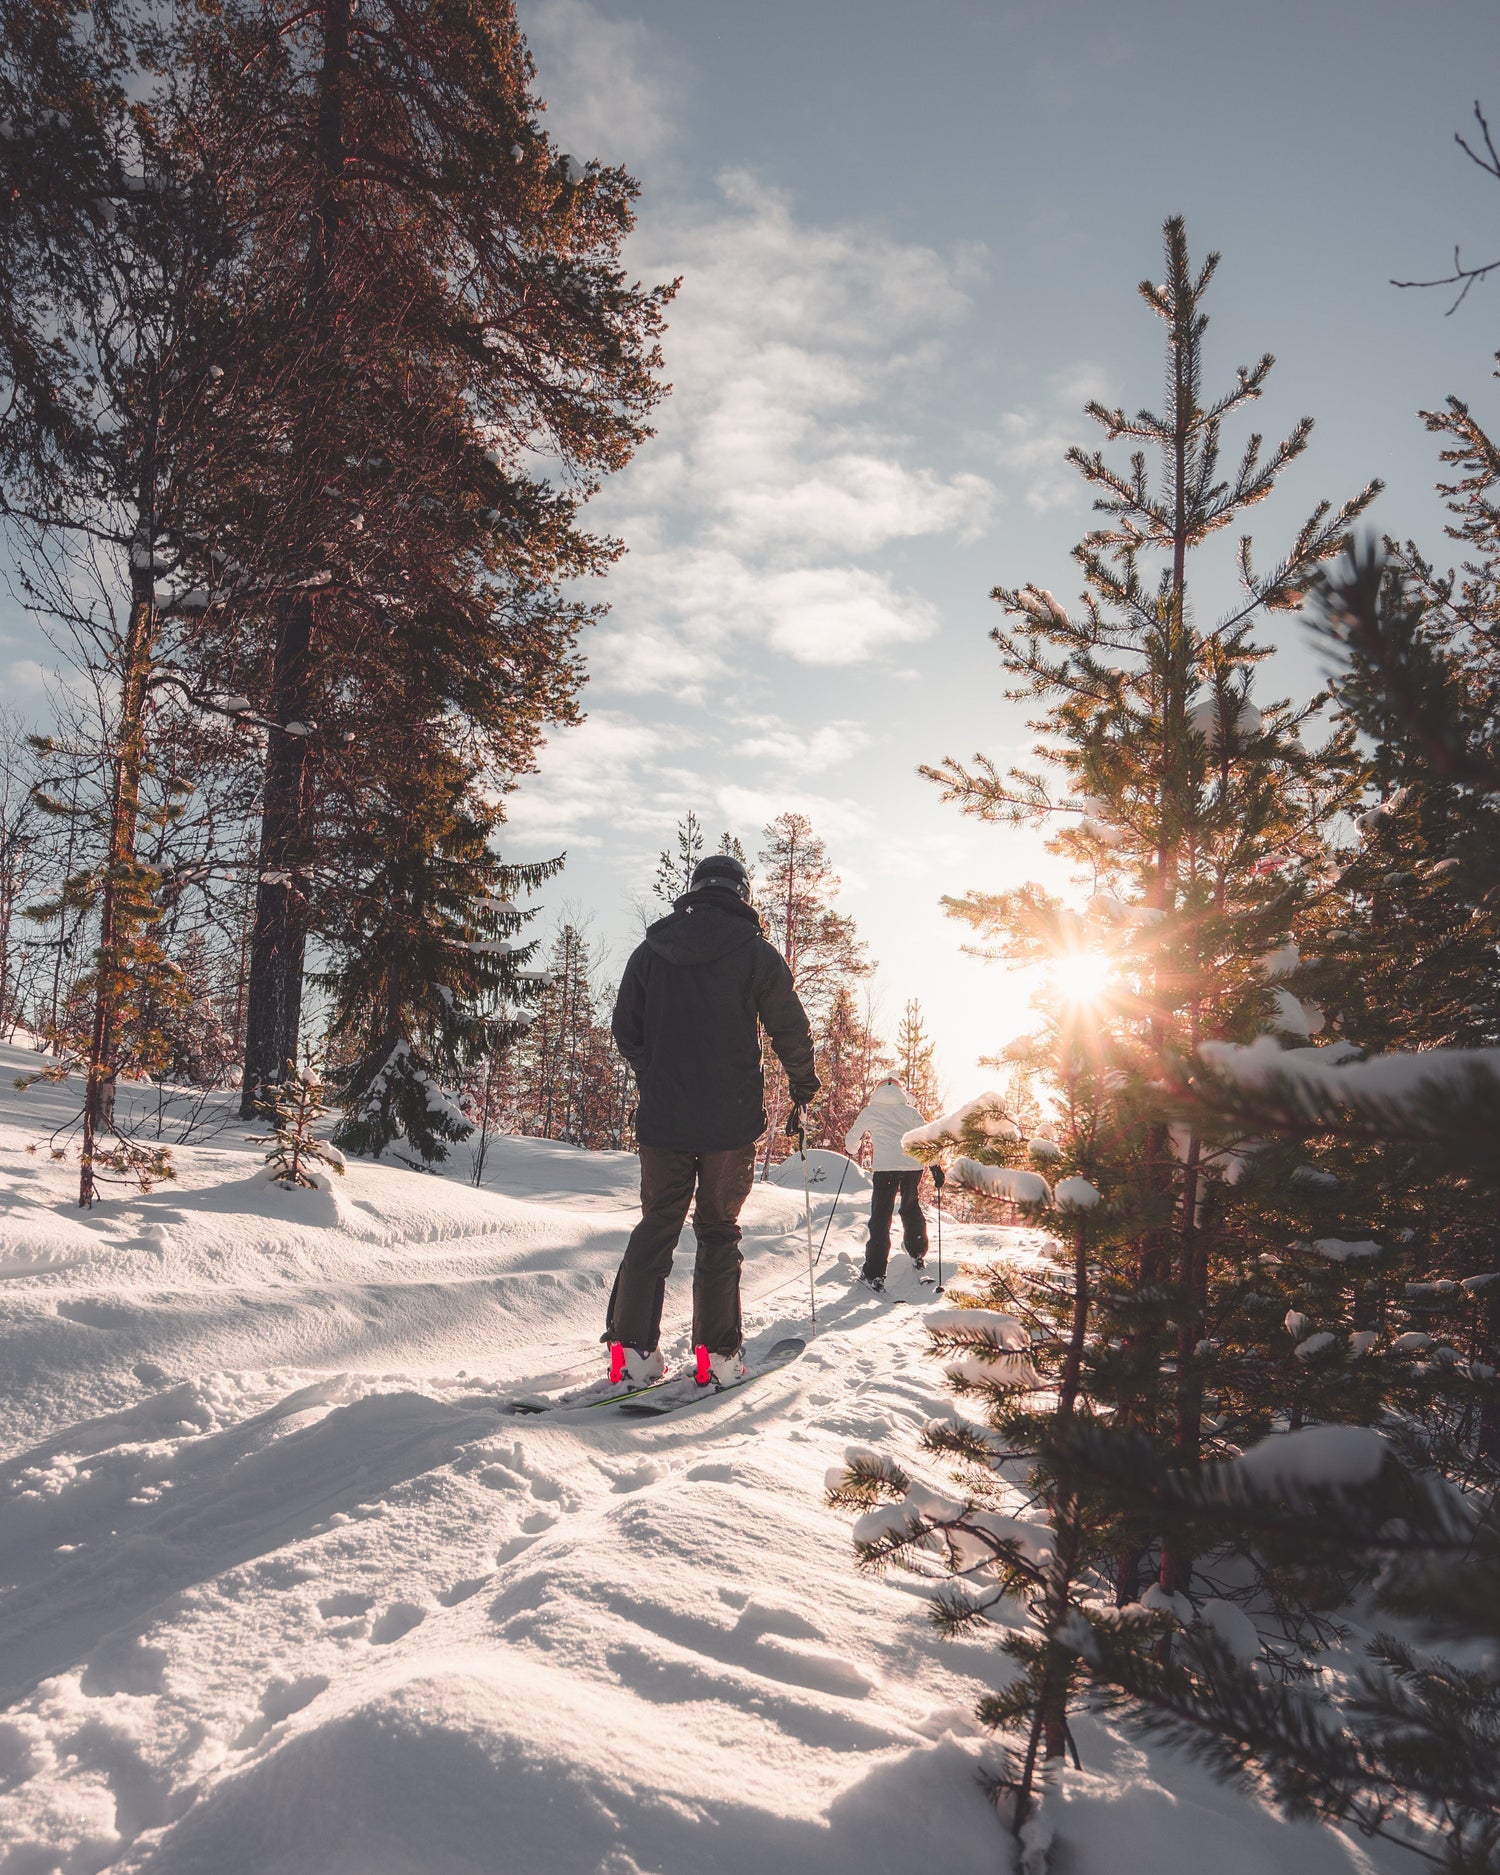 how to take coffee skiing?